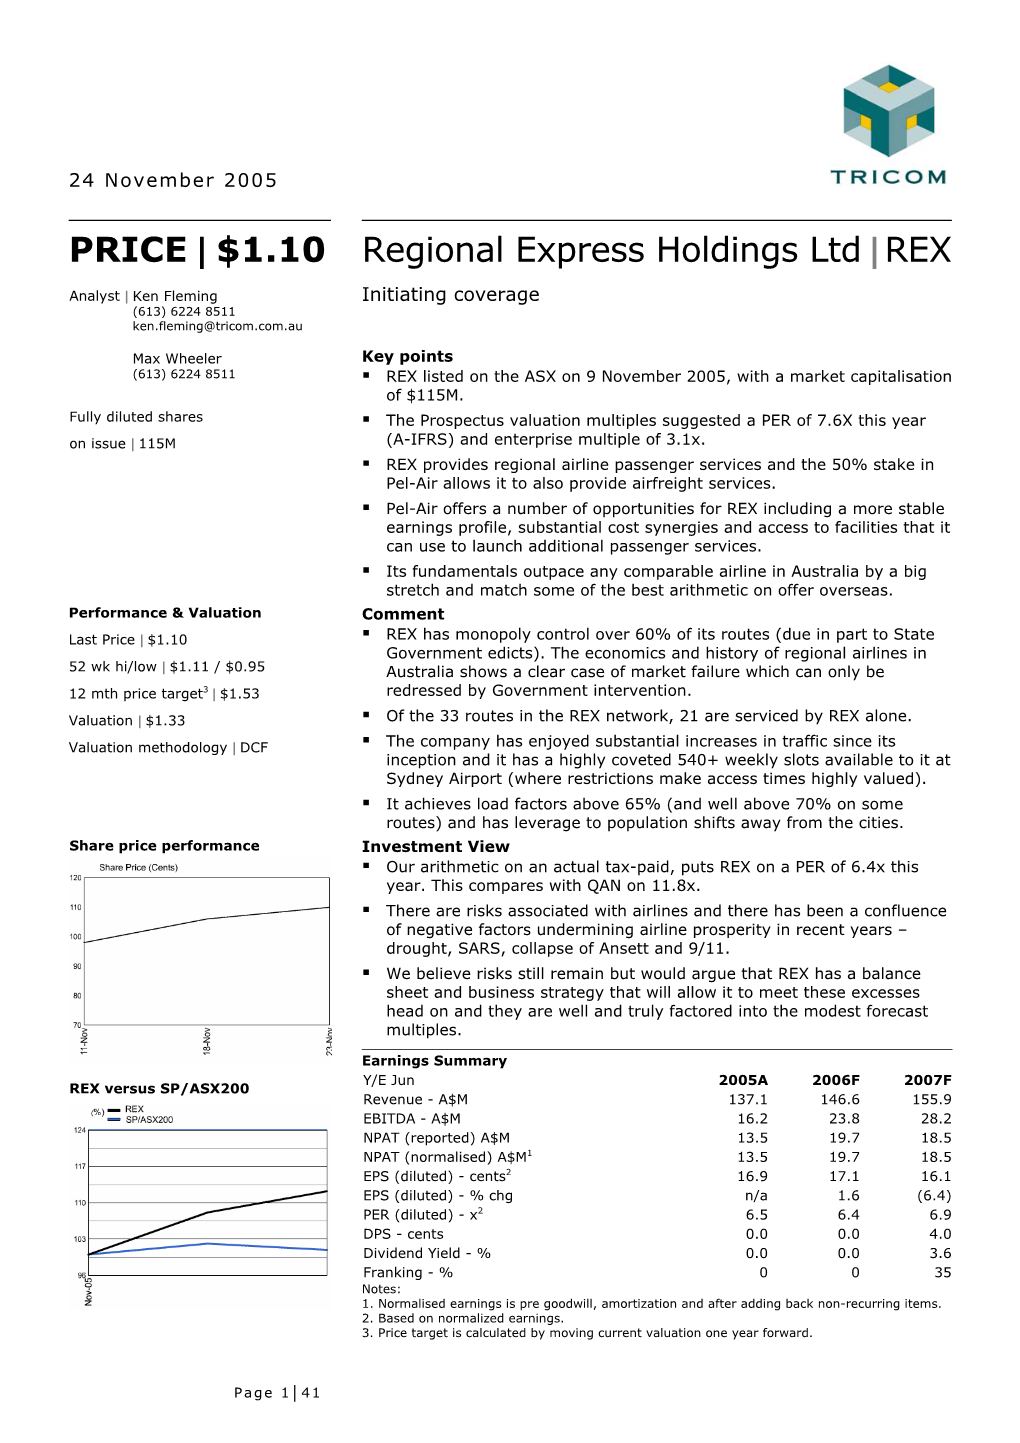 PRICE | $1.10 Regional Express Holdings Ltd | REX